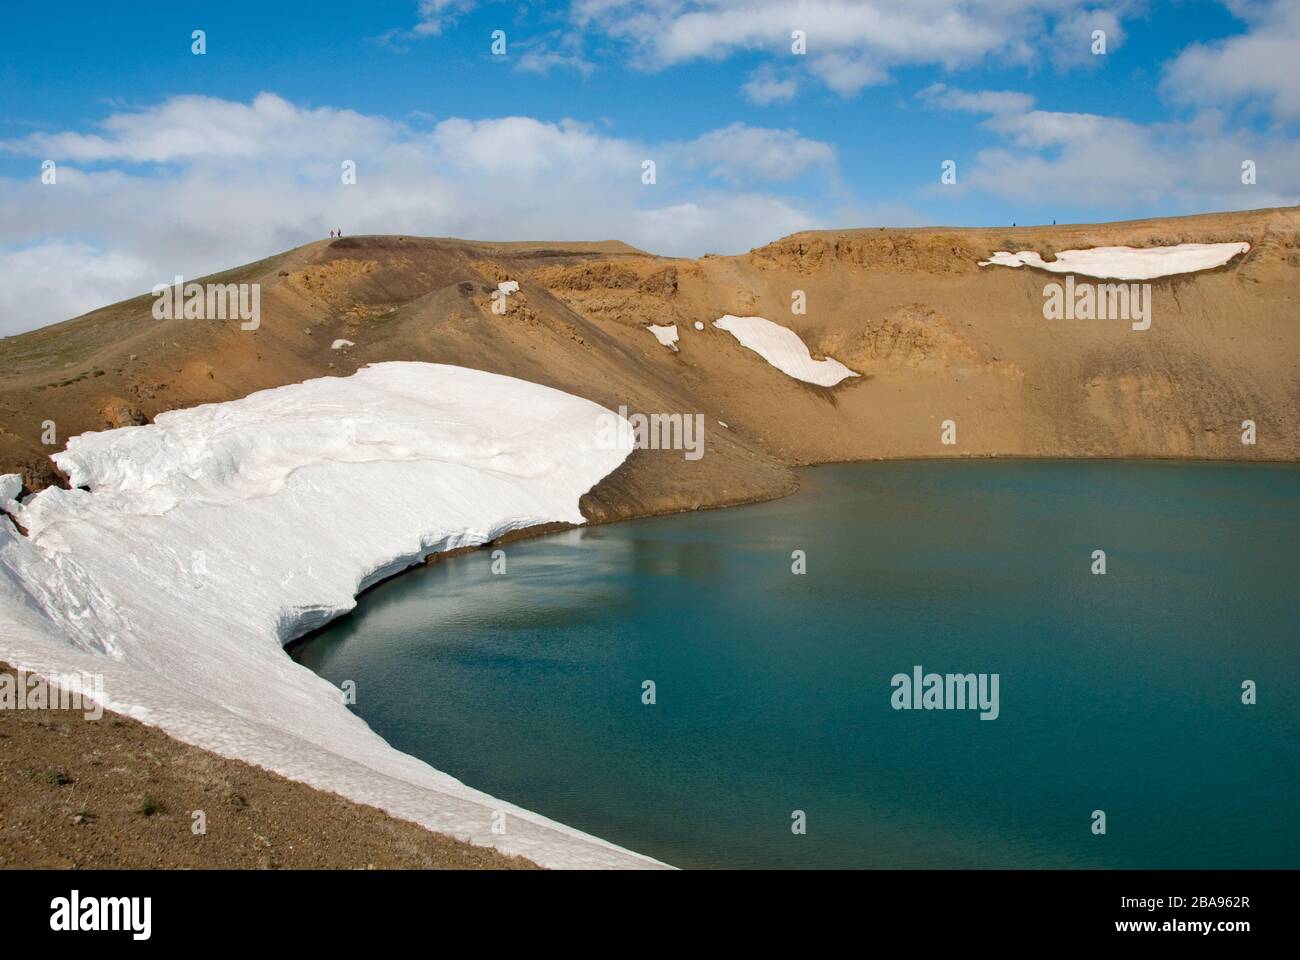 Europa, Island, Iceland, Krater des Vulkans Krafla, Stora Viti, Kratersee, Schnee, aktive Vulkanzone Stock Photo